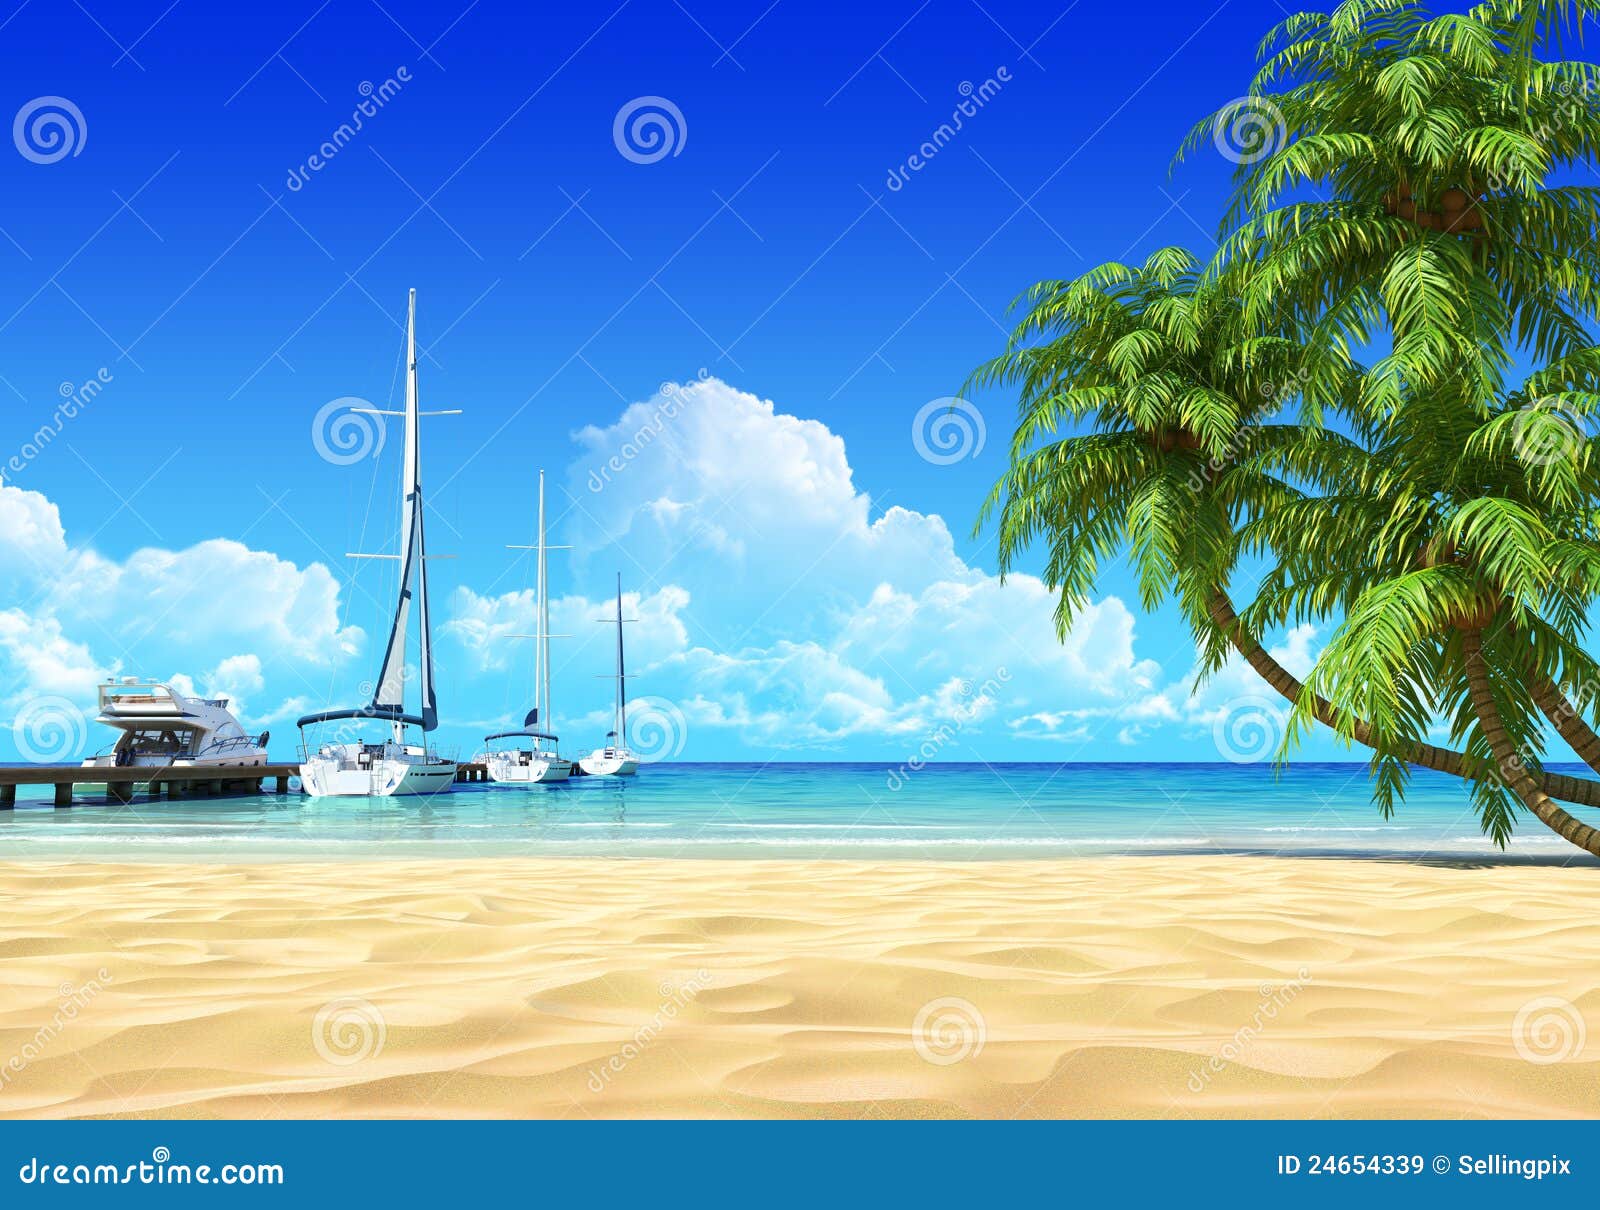 marina pier and palms on idyllic tropical beach